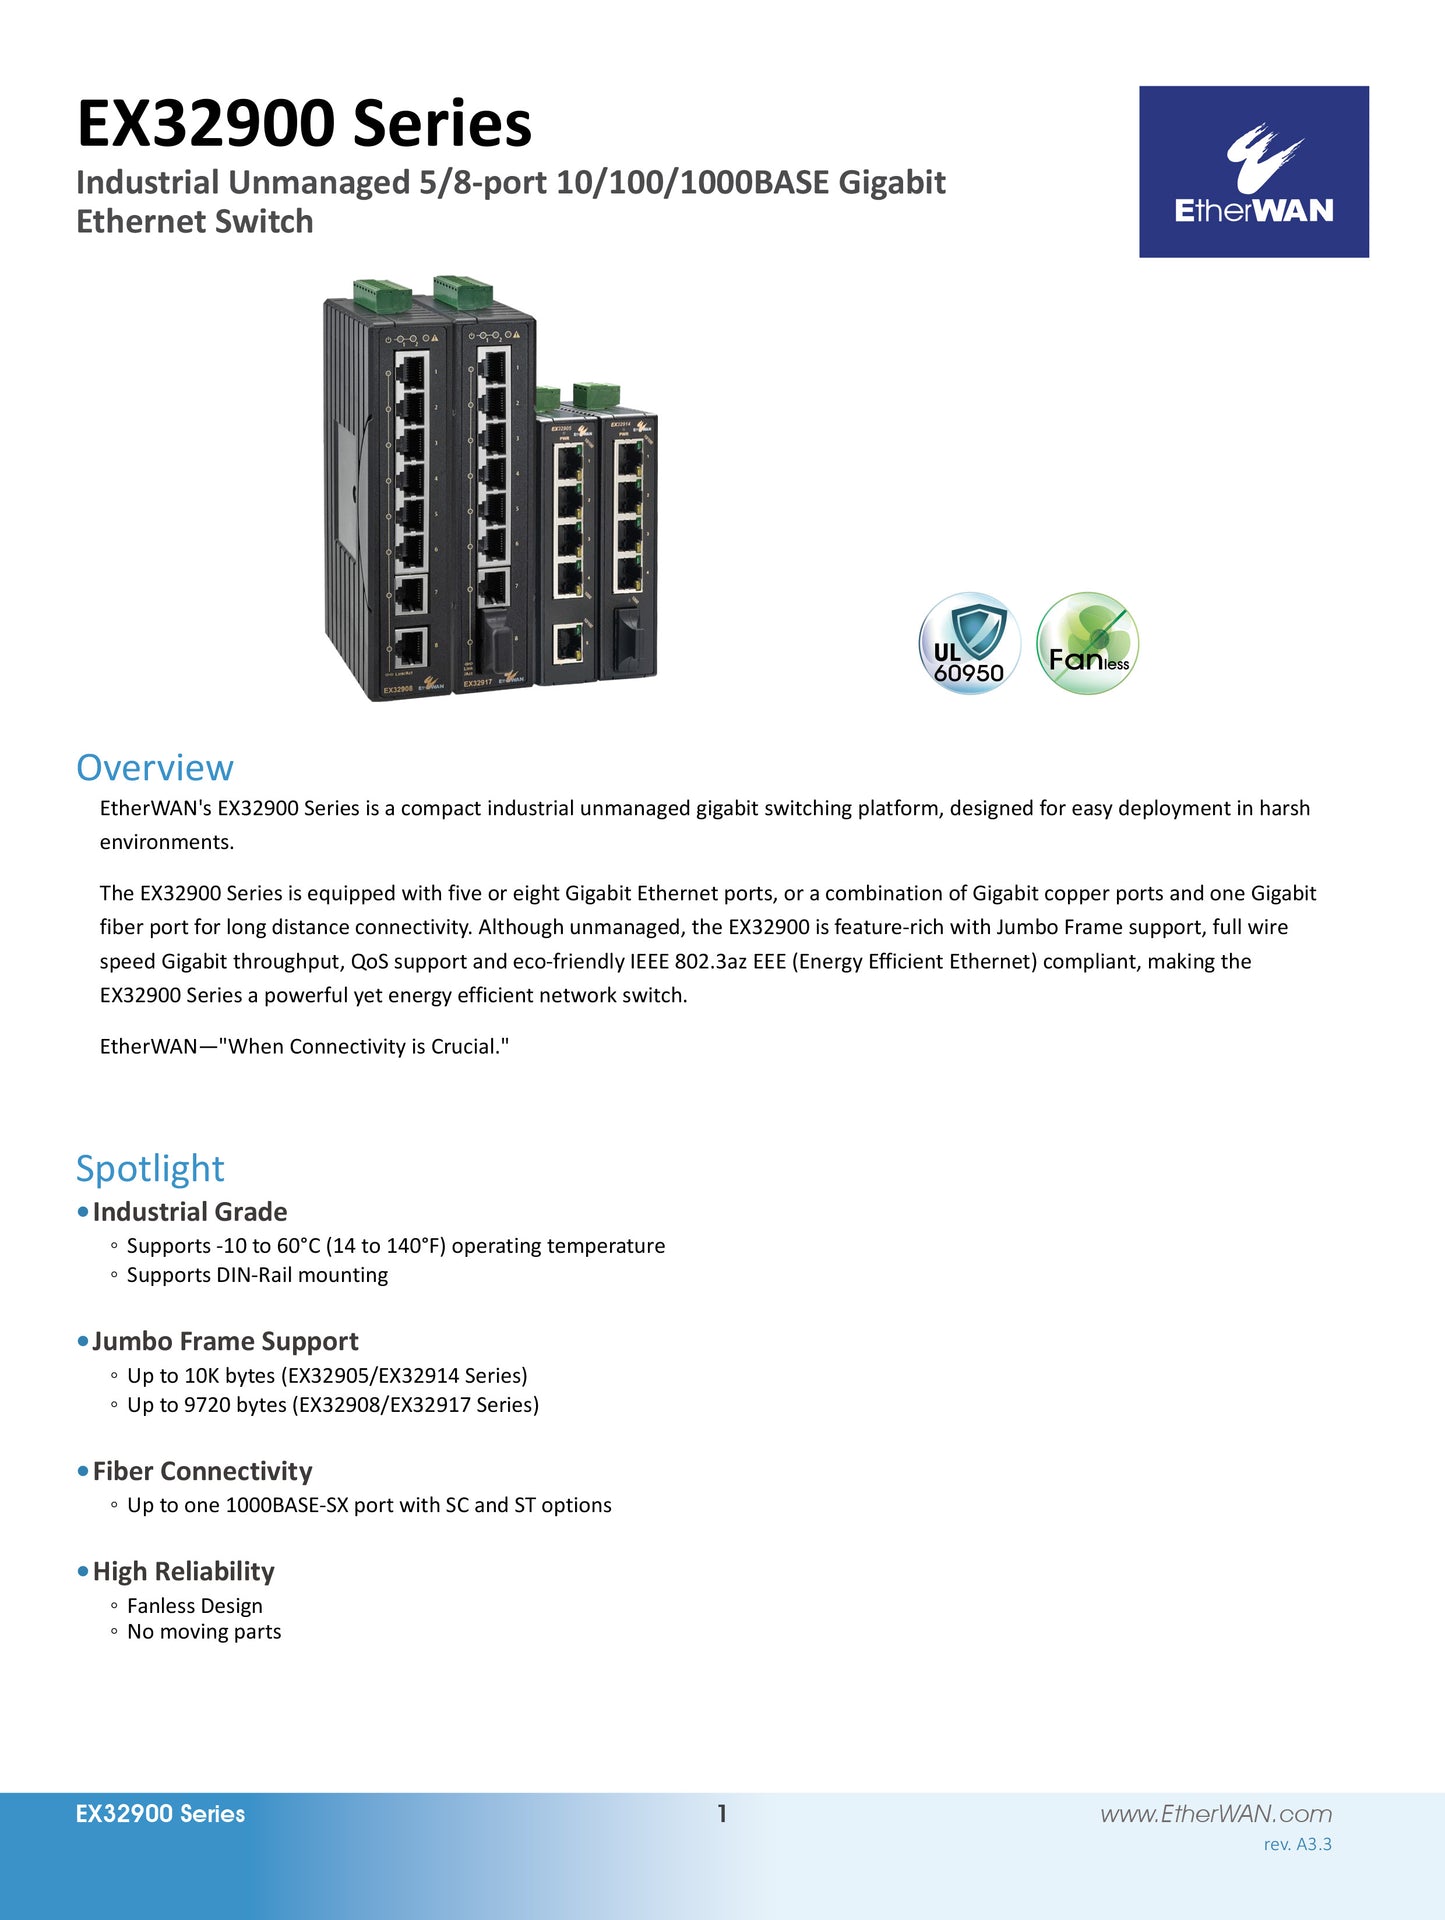 EX32914-3 - Industrial Unmanaged Gigabit Ethernet Switch (4-port 10/100/1000BASE-T +1-port 1000BASE-SX (SC) - 550m